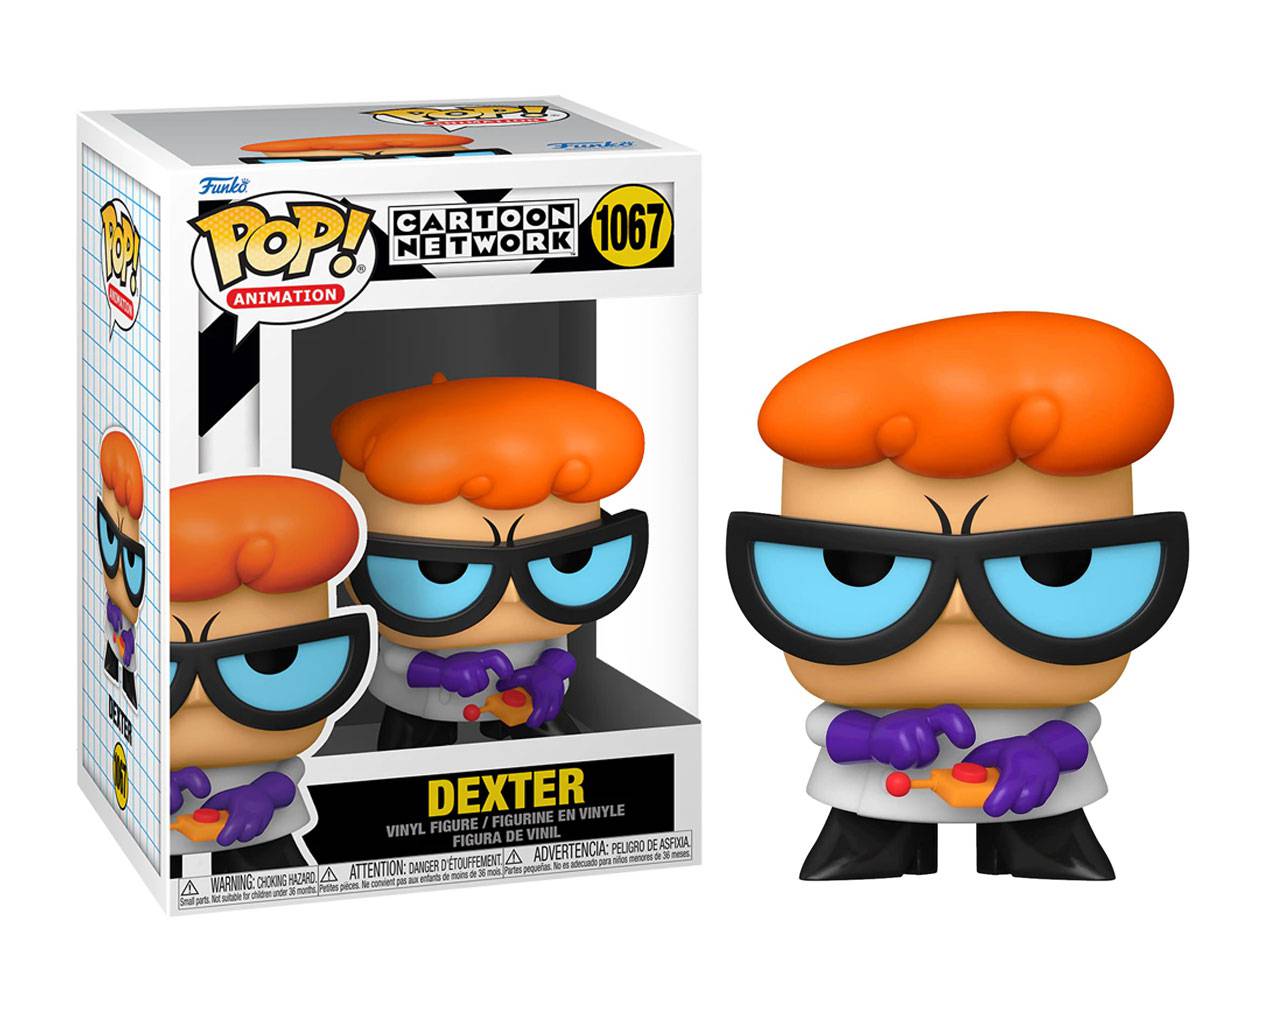 Dexter with Remote Pop! Vinyl